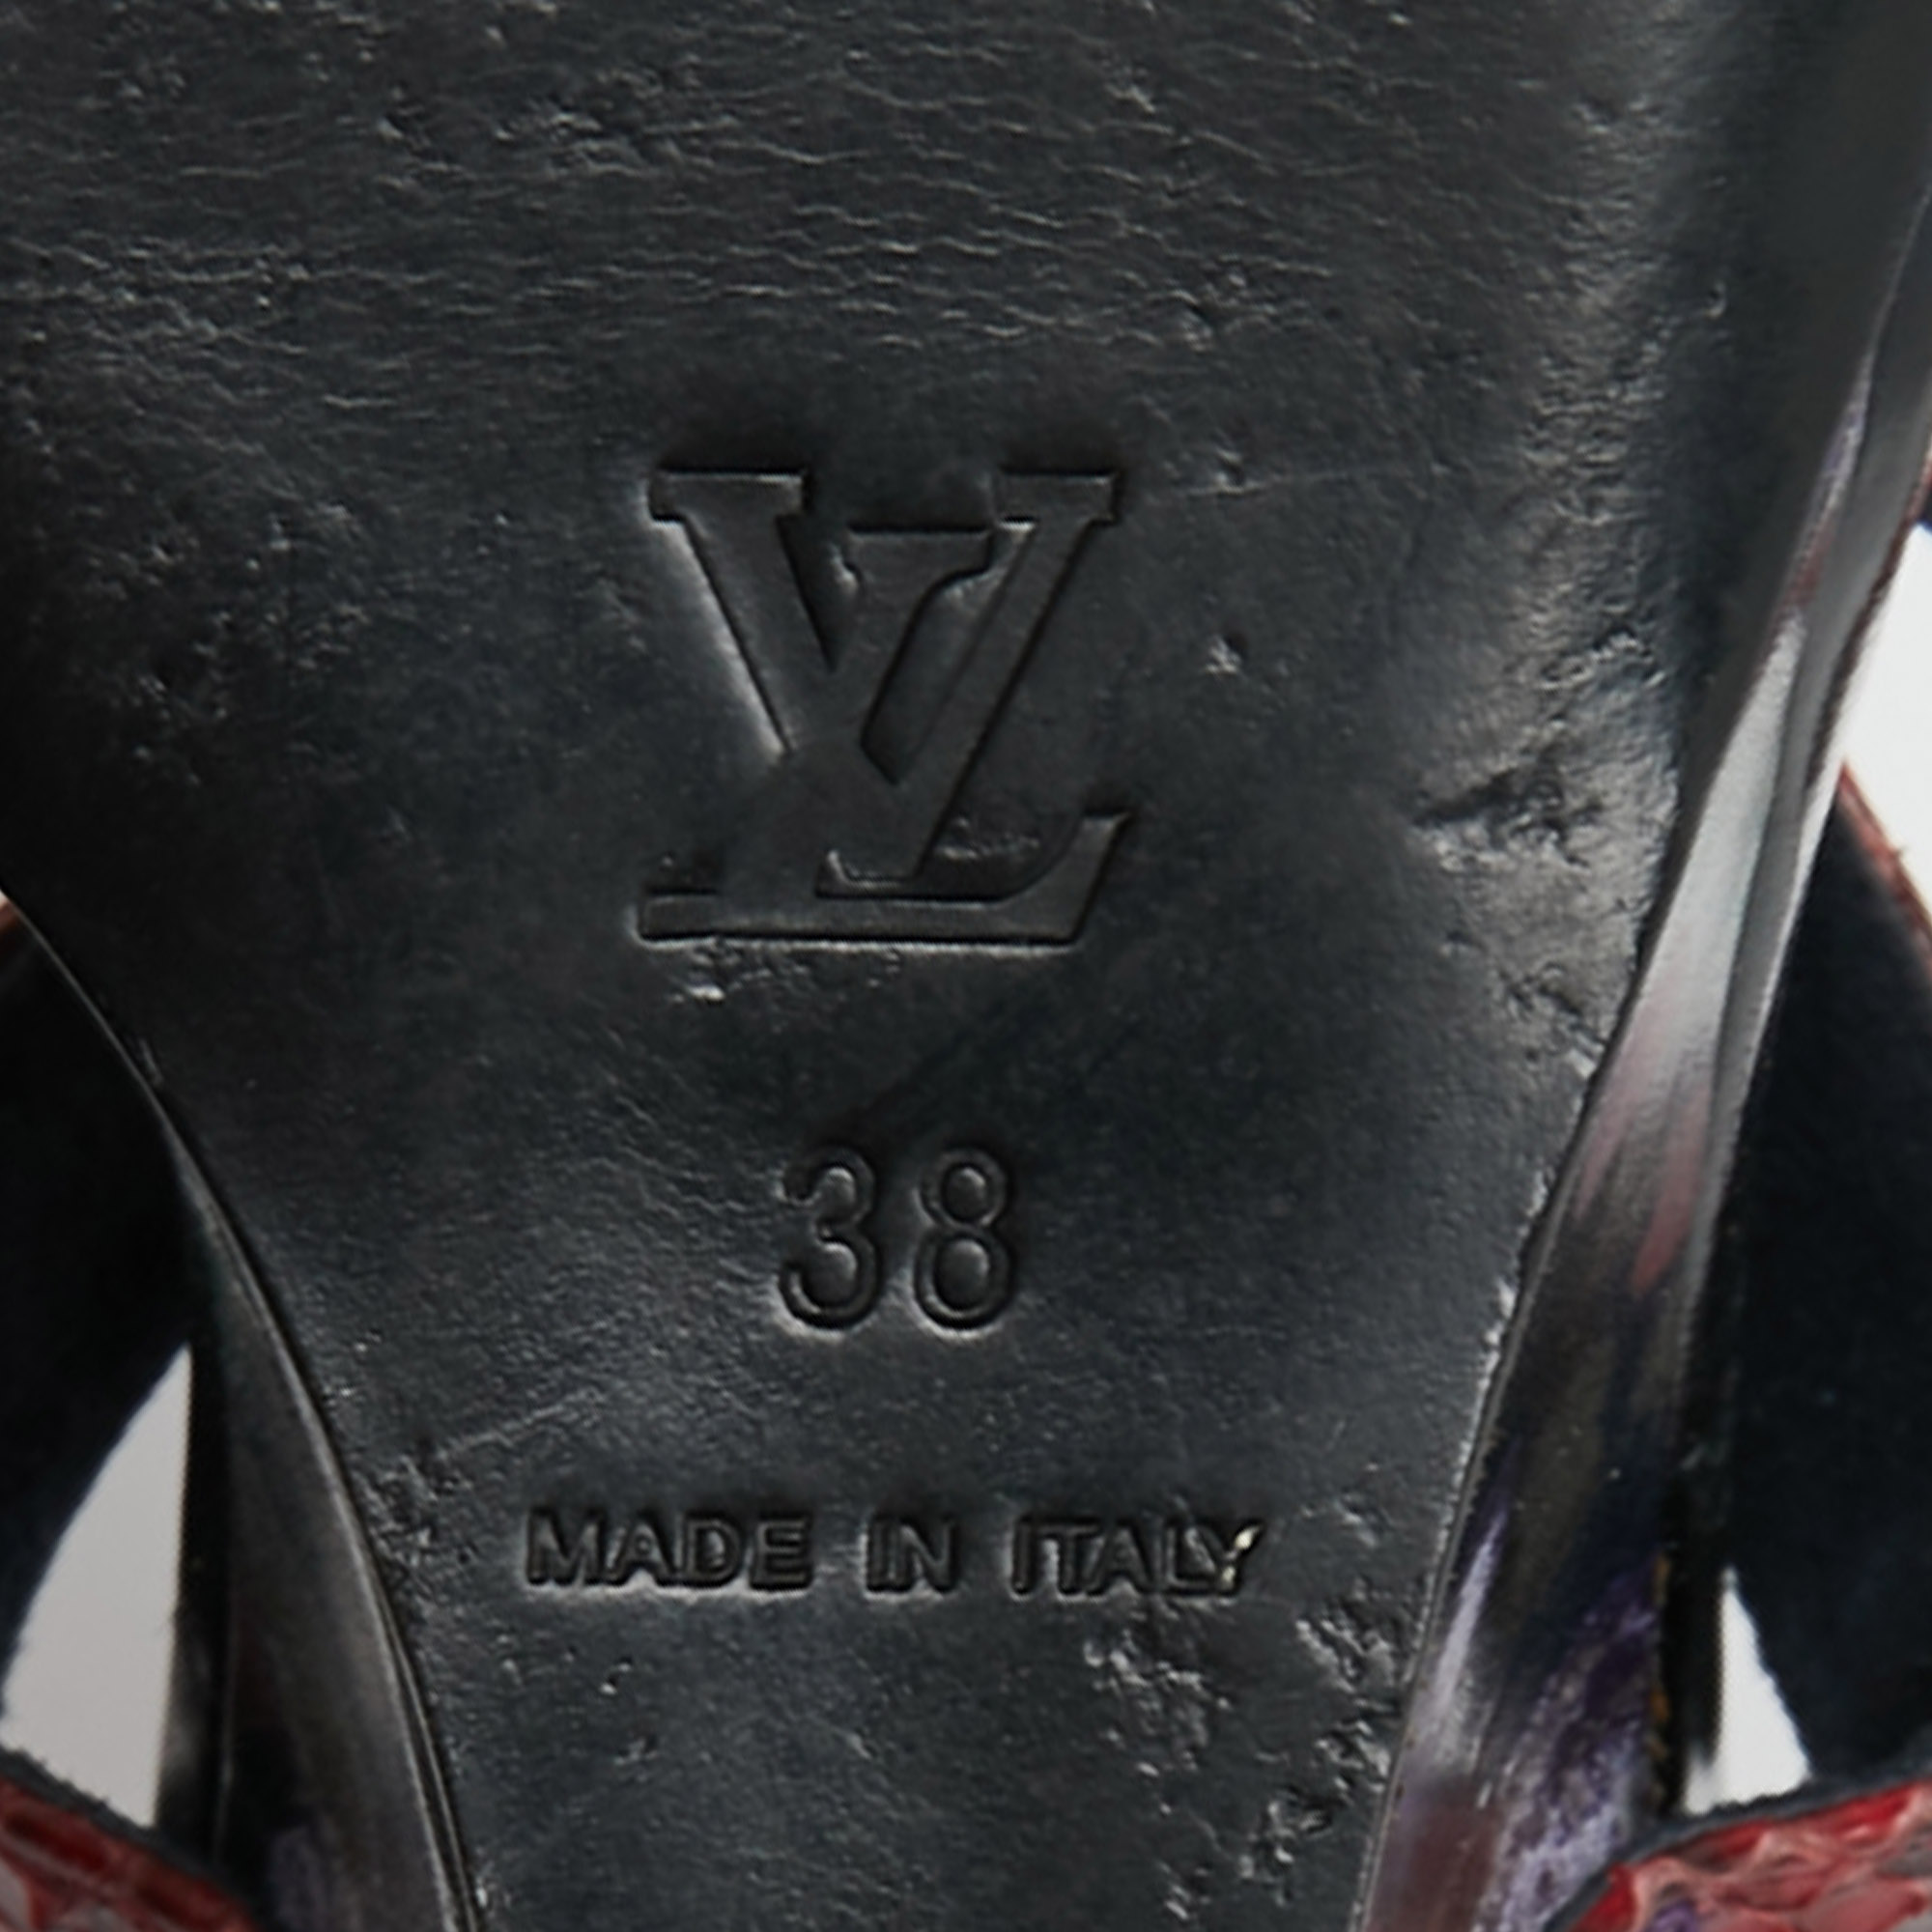 Louis Vuitton Dark Red/Navy Blue Snakeskin And Velvet Cross Ankle Strap Wedge Sandals Size 38